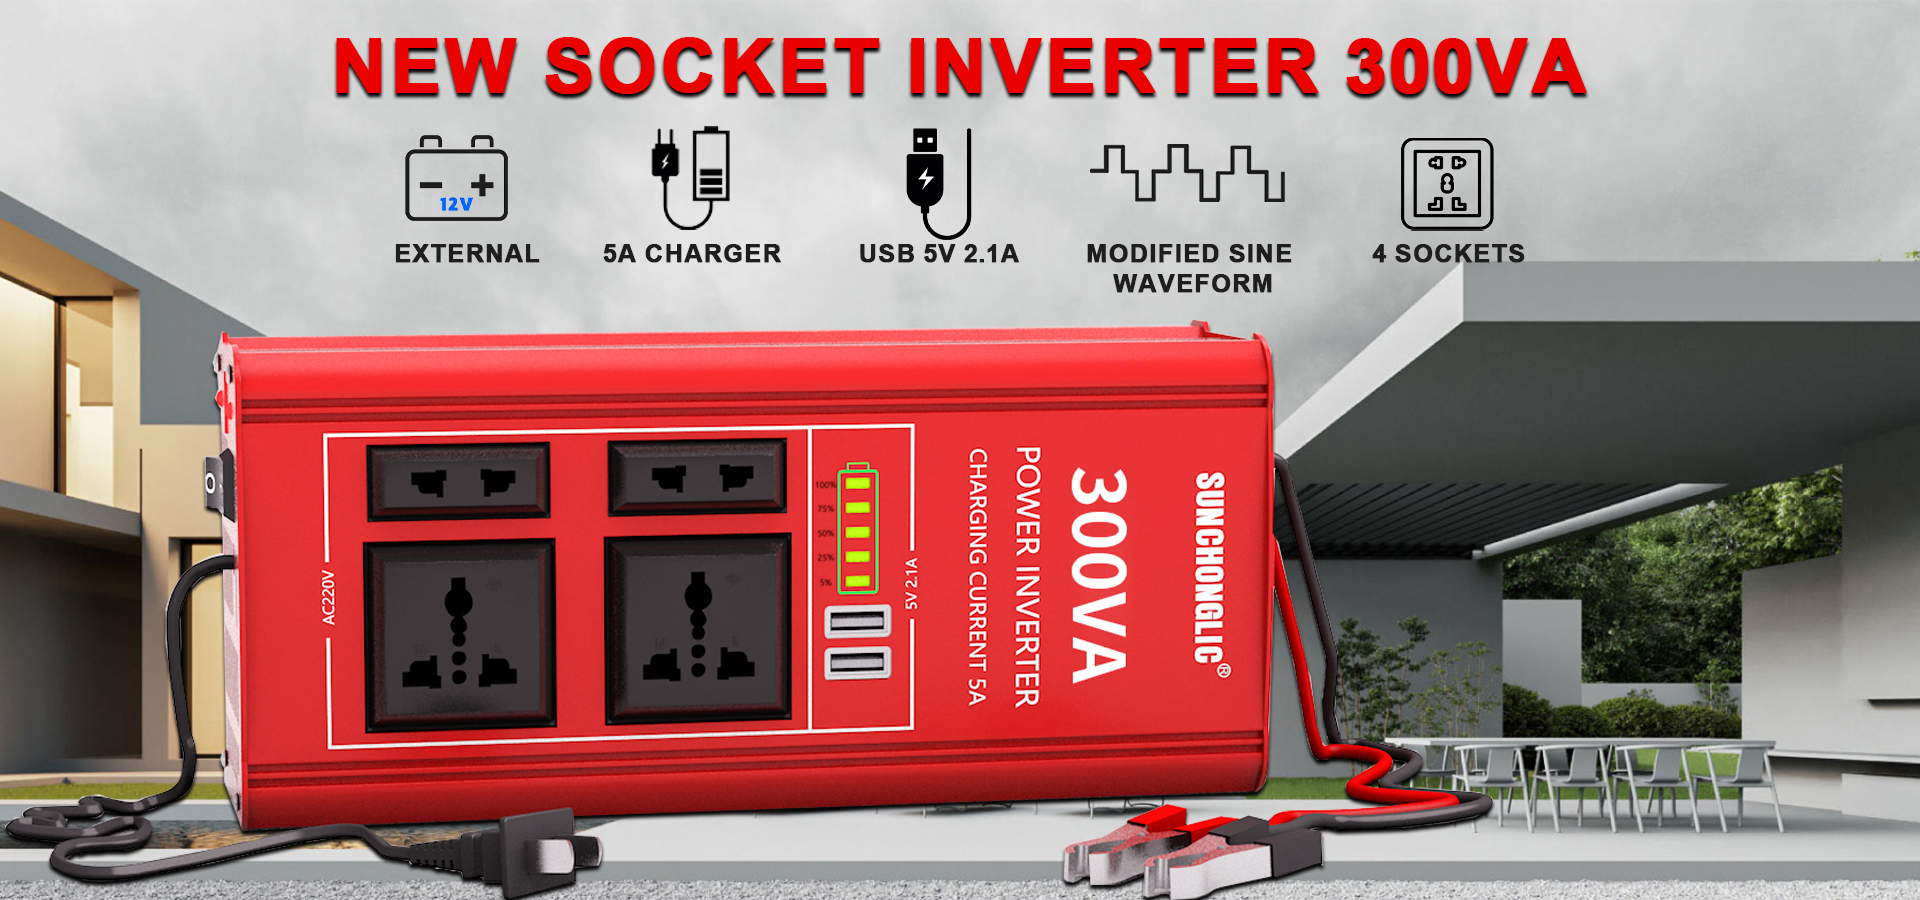 Socket inverter 300va with charger